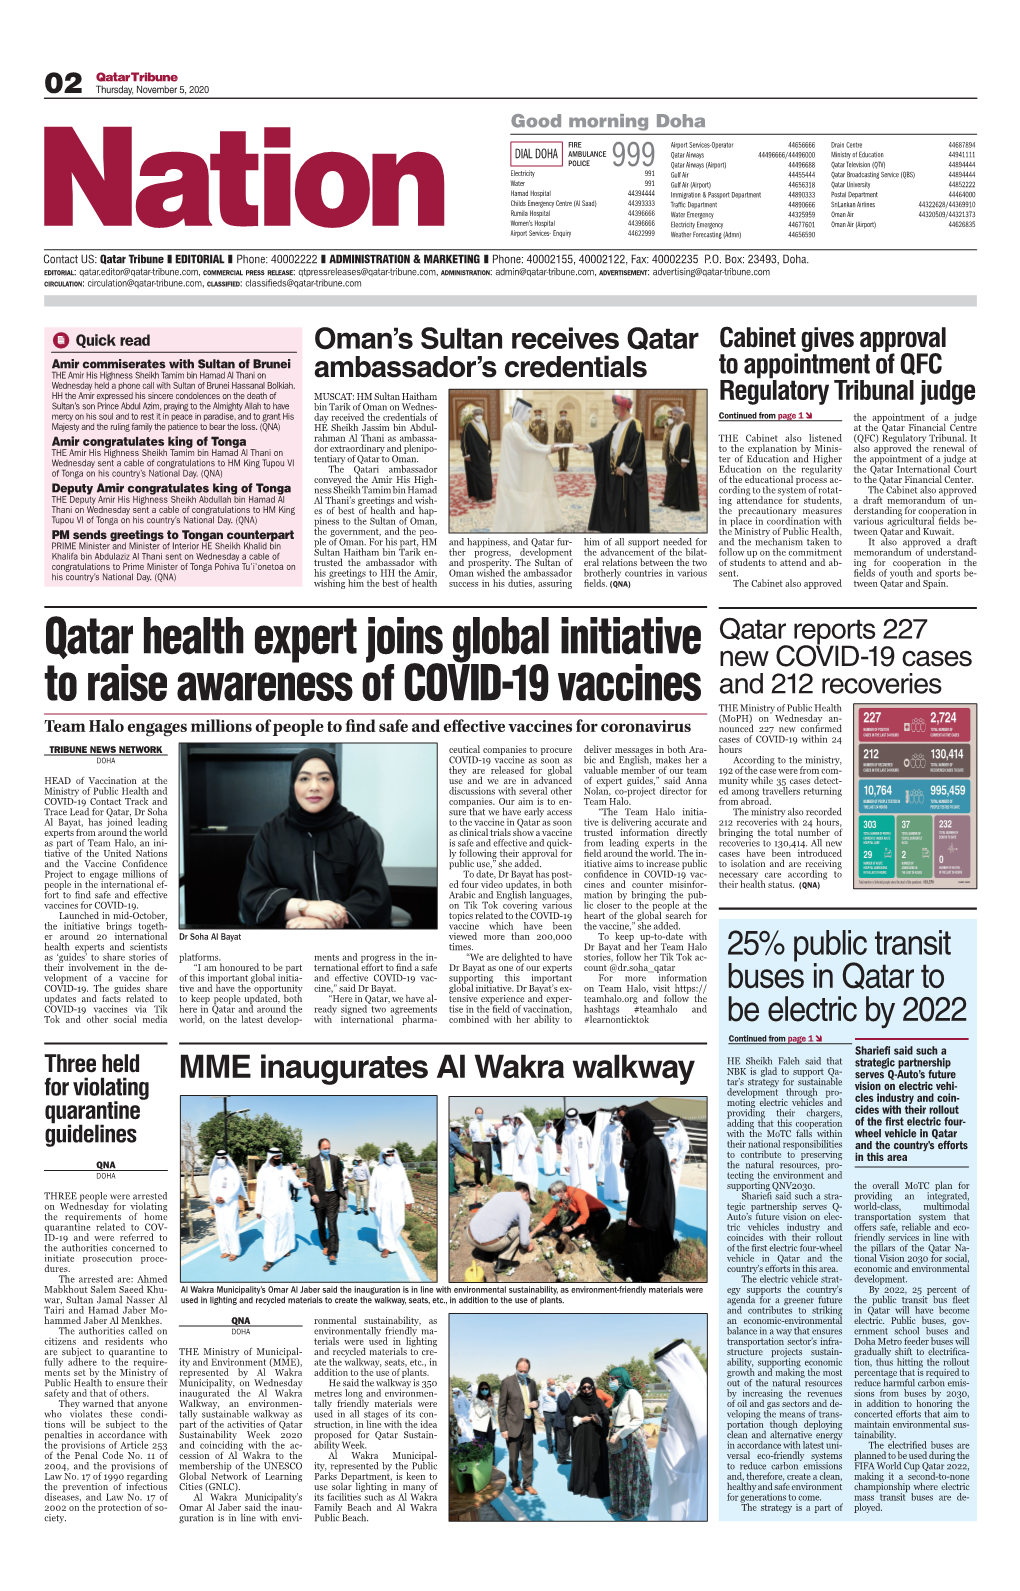 Qatar Health Expert Joins Global Initiative to Raise Awareness Of